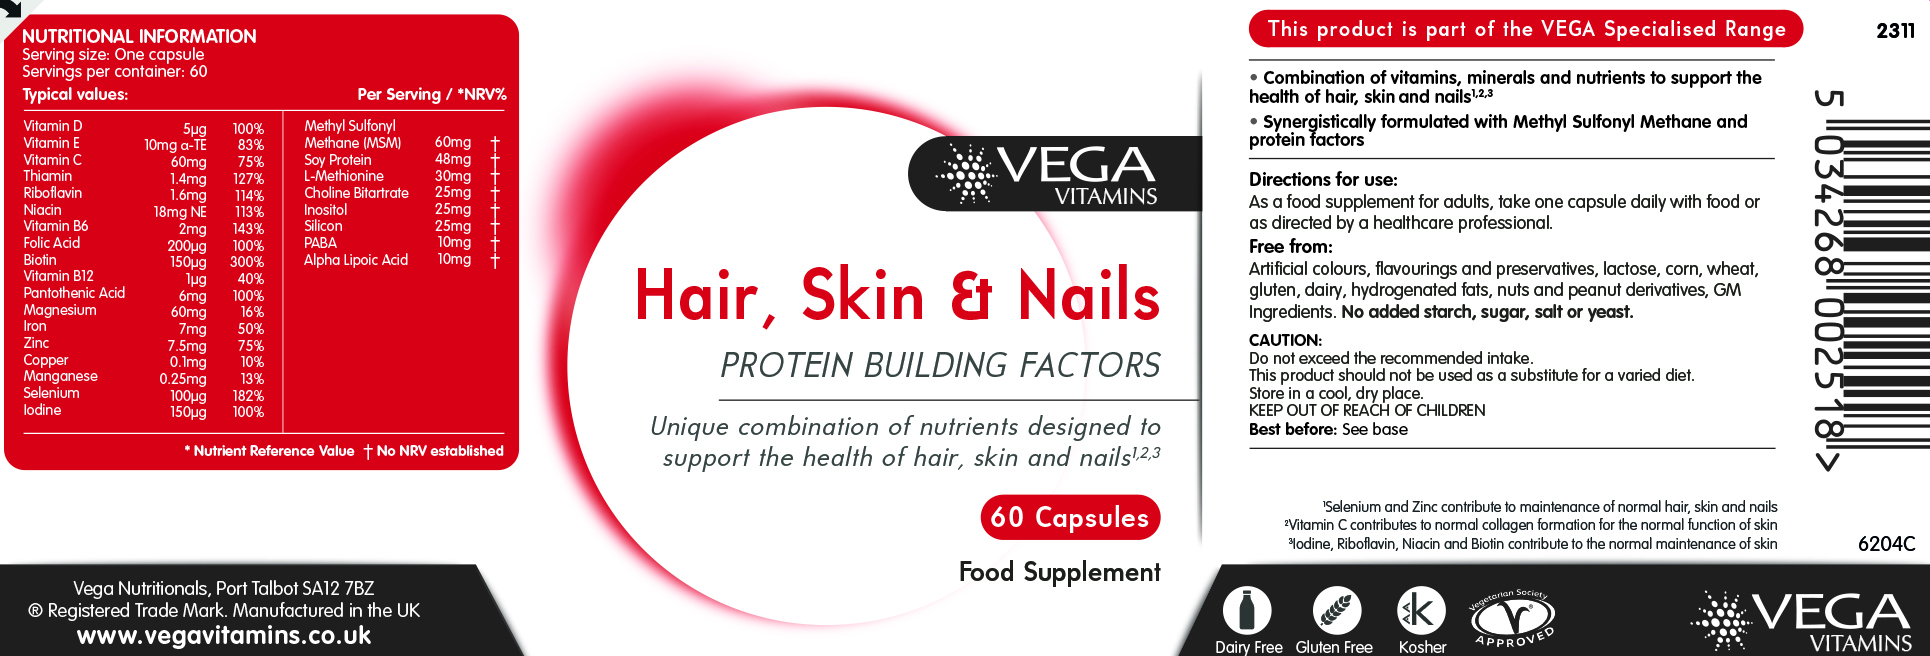 Hair, Skin & Nails - Protein Building Factors - Vega Vitamins